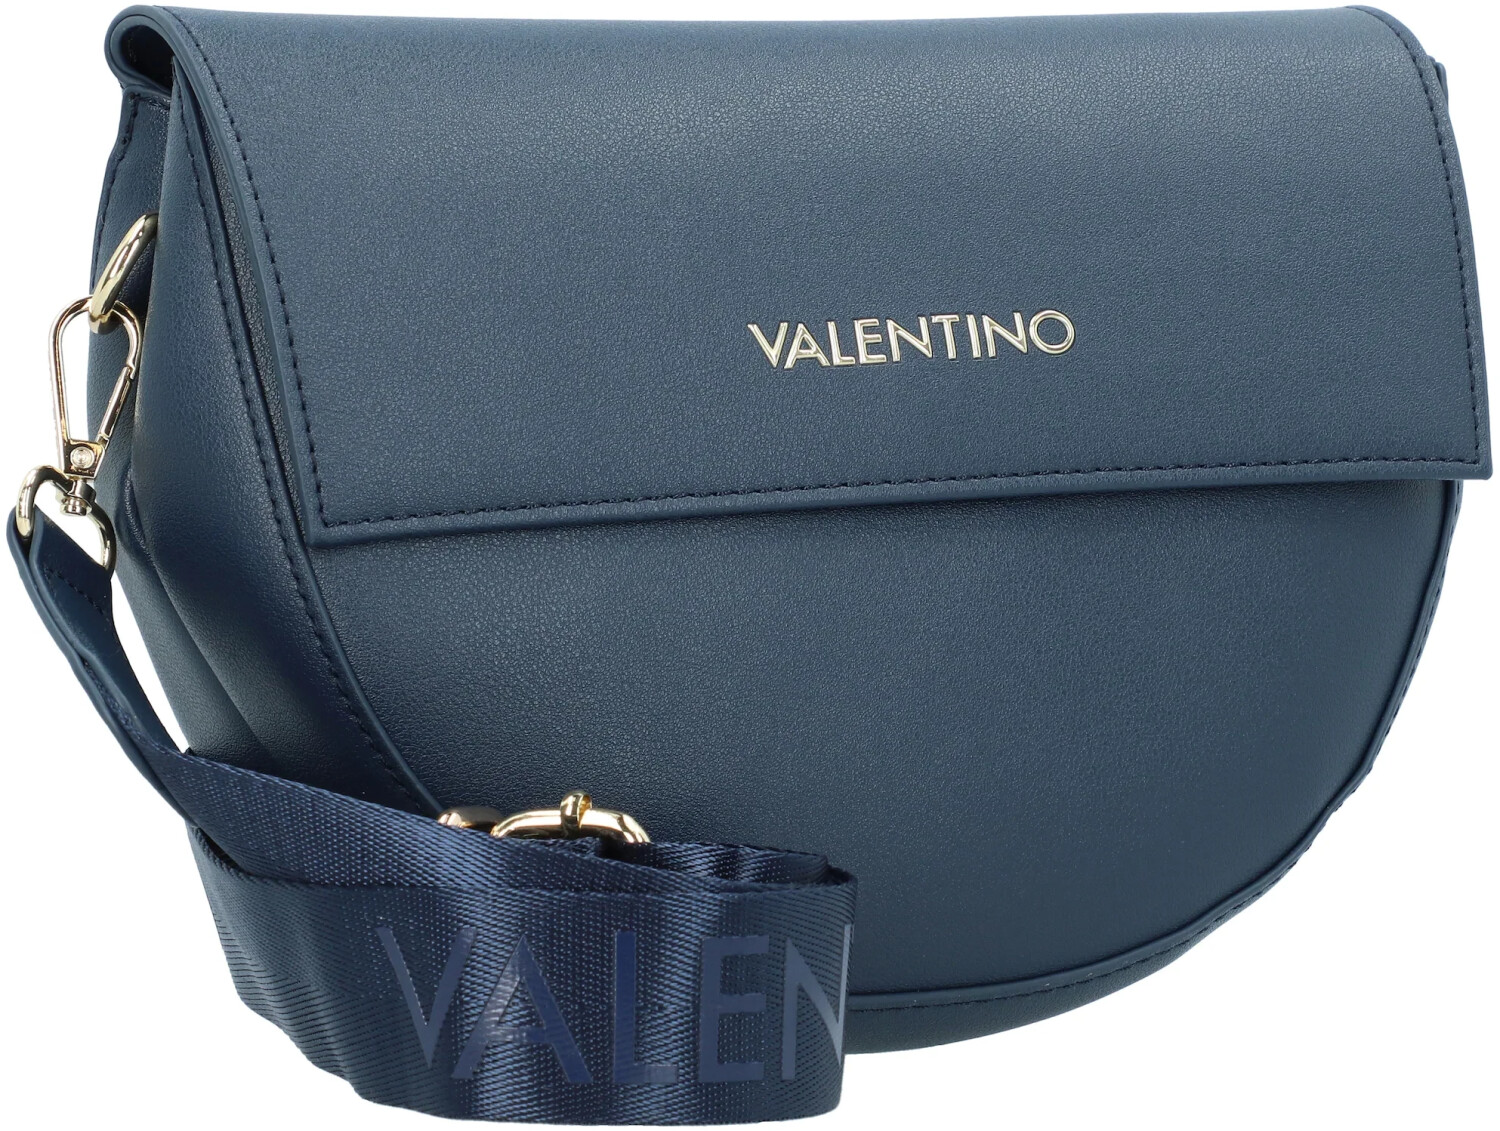 Valentino Bags Bigs cross body saddle bag in white